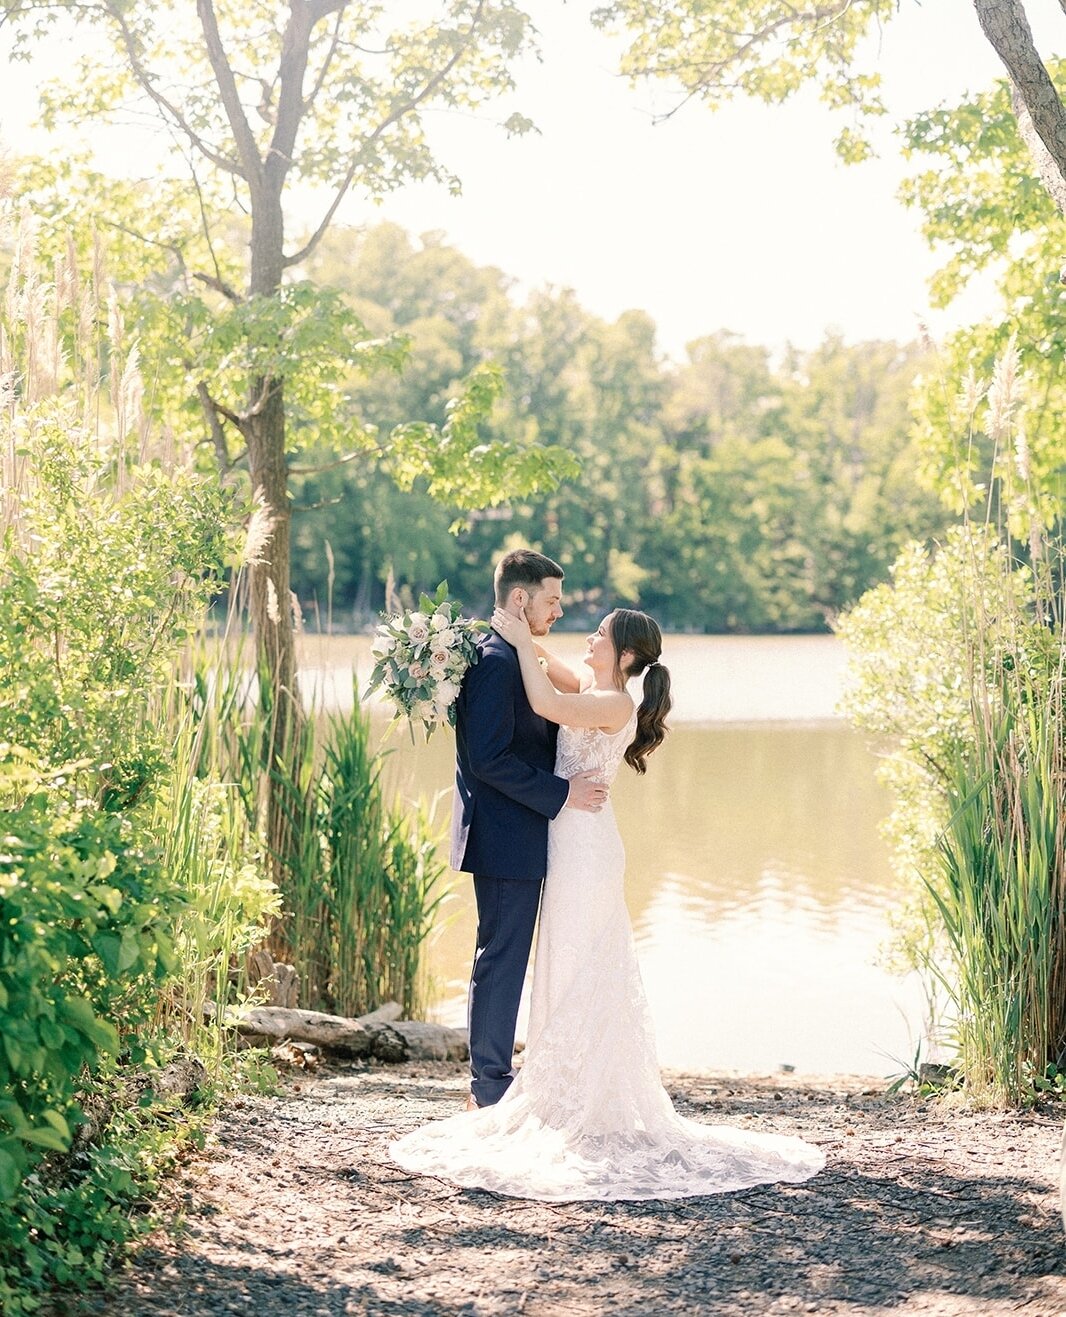 Blackwalnut Creek is the perfect spot for unique wedding photos!